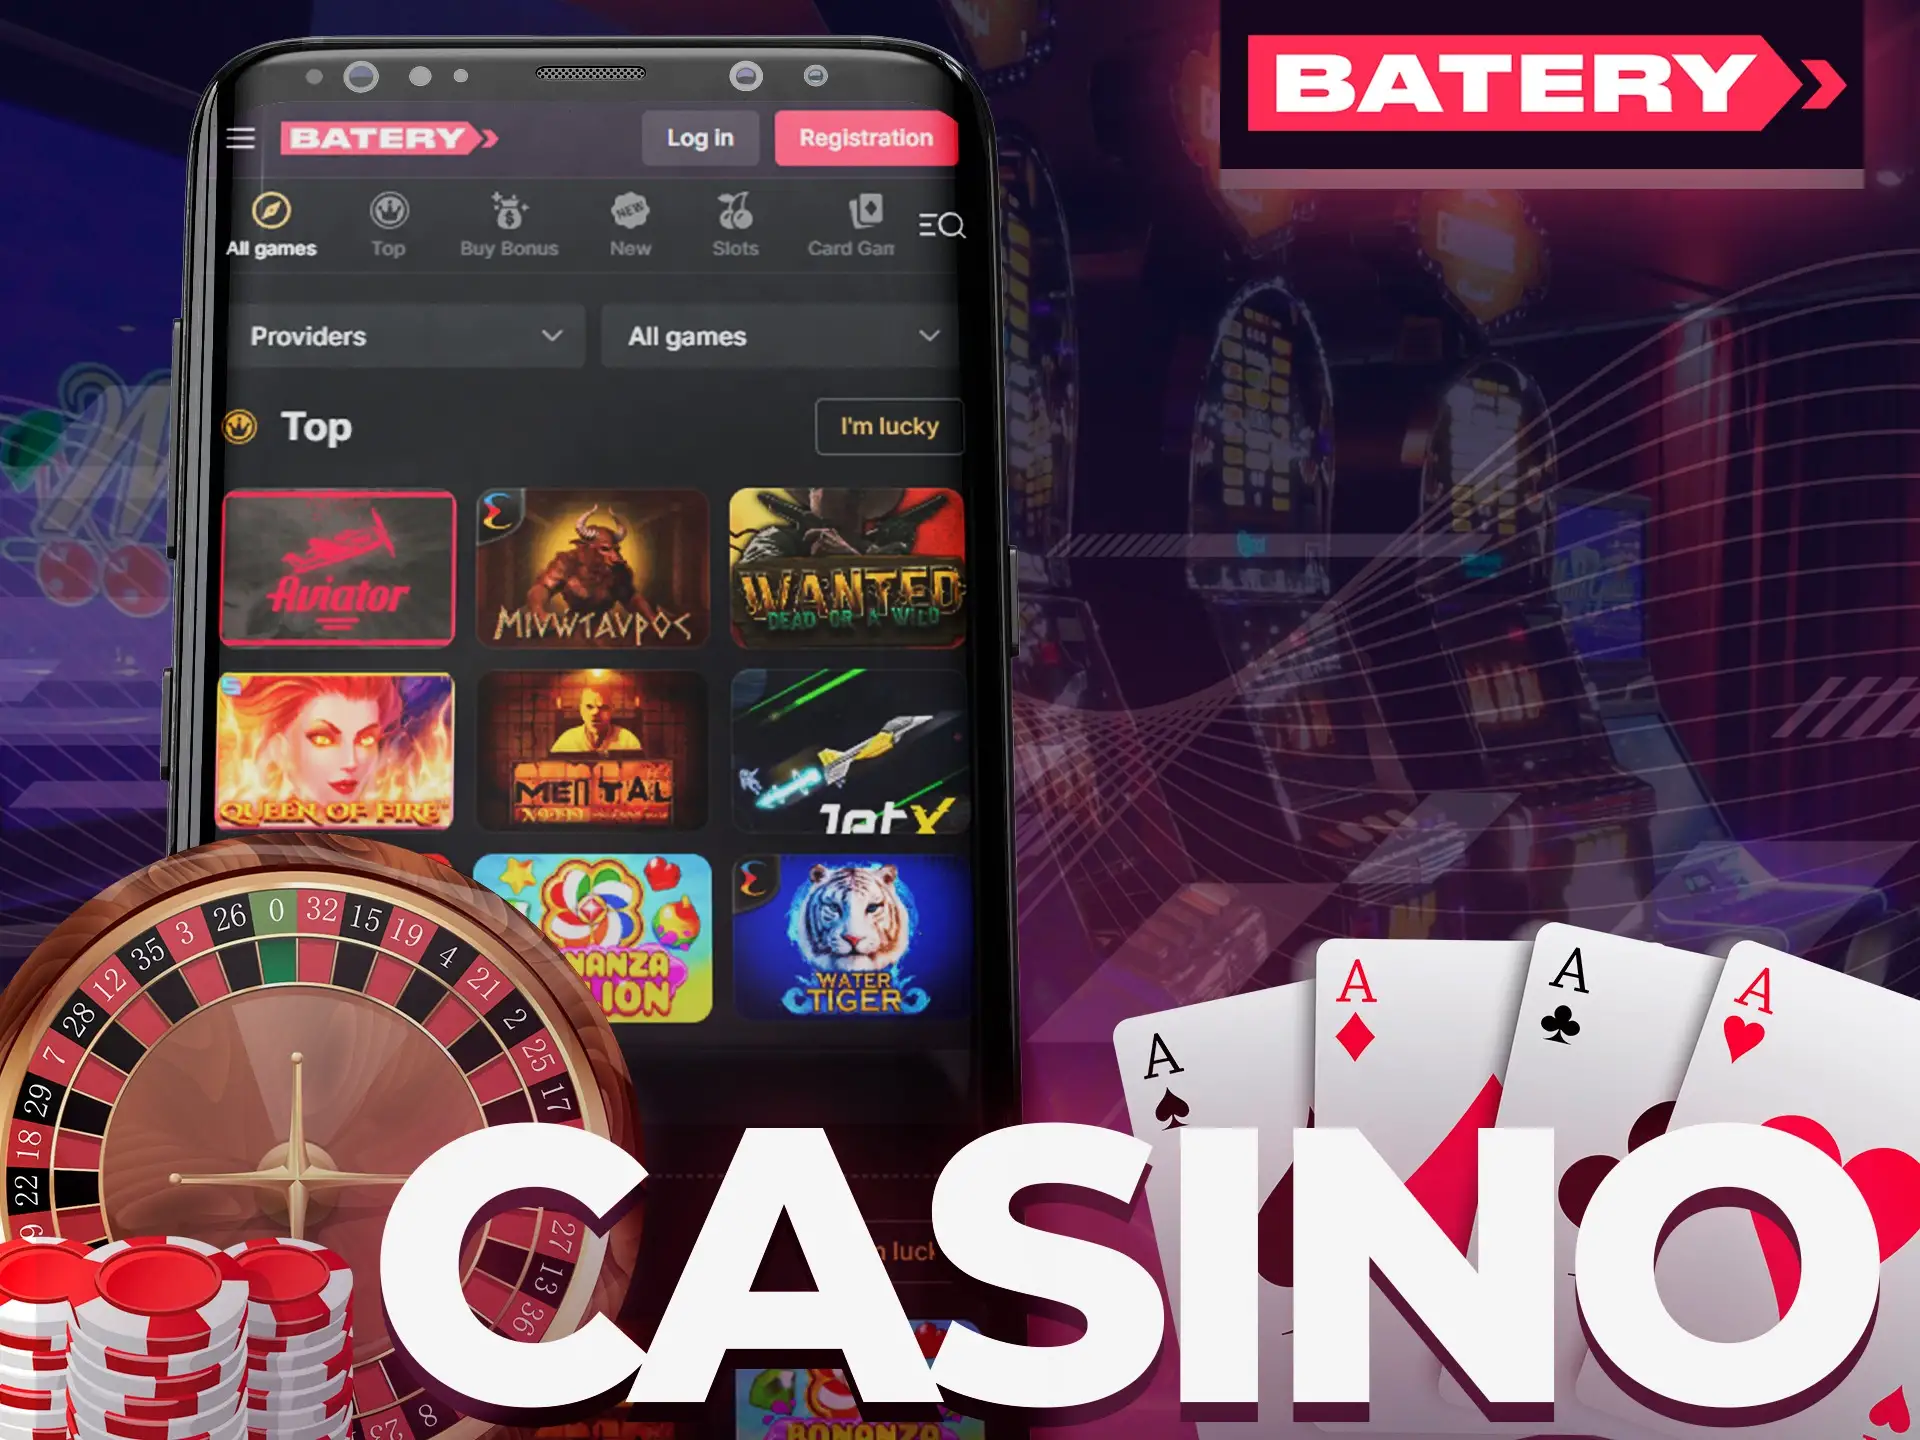 Play Batery casino using app and get bonus.